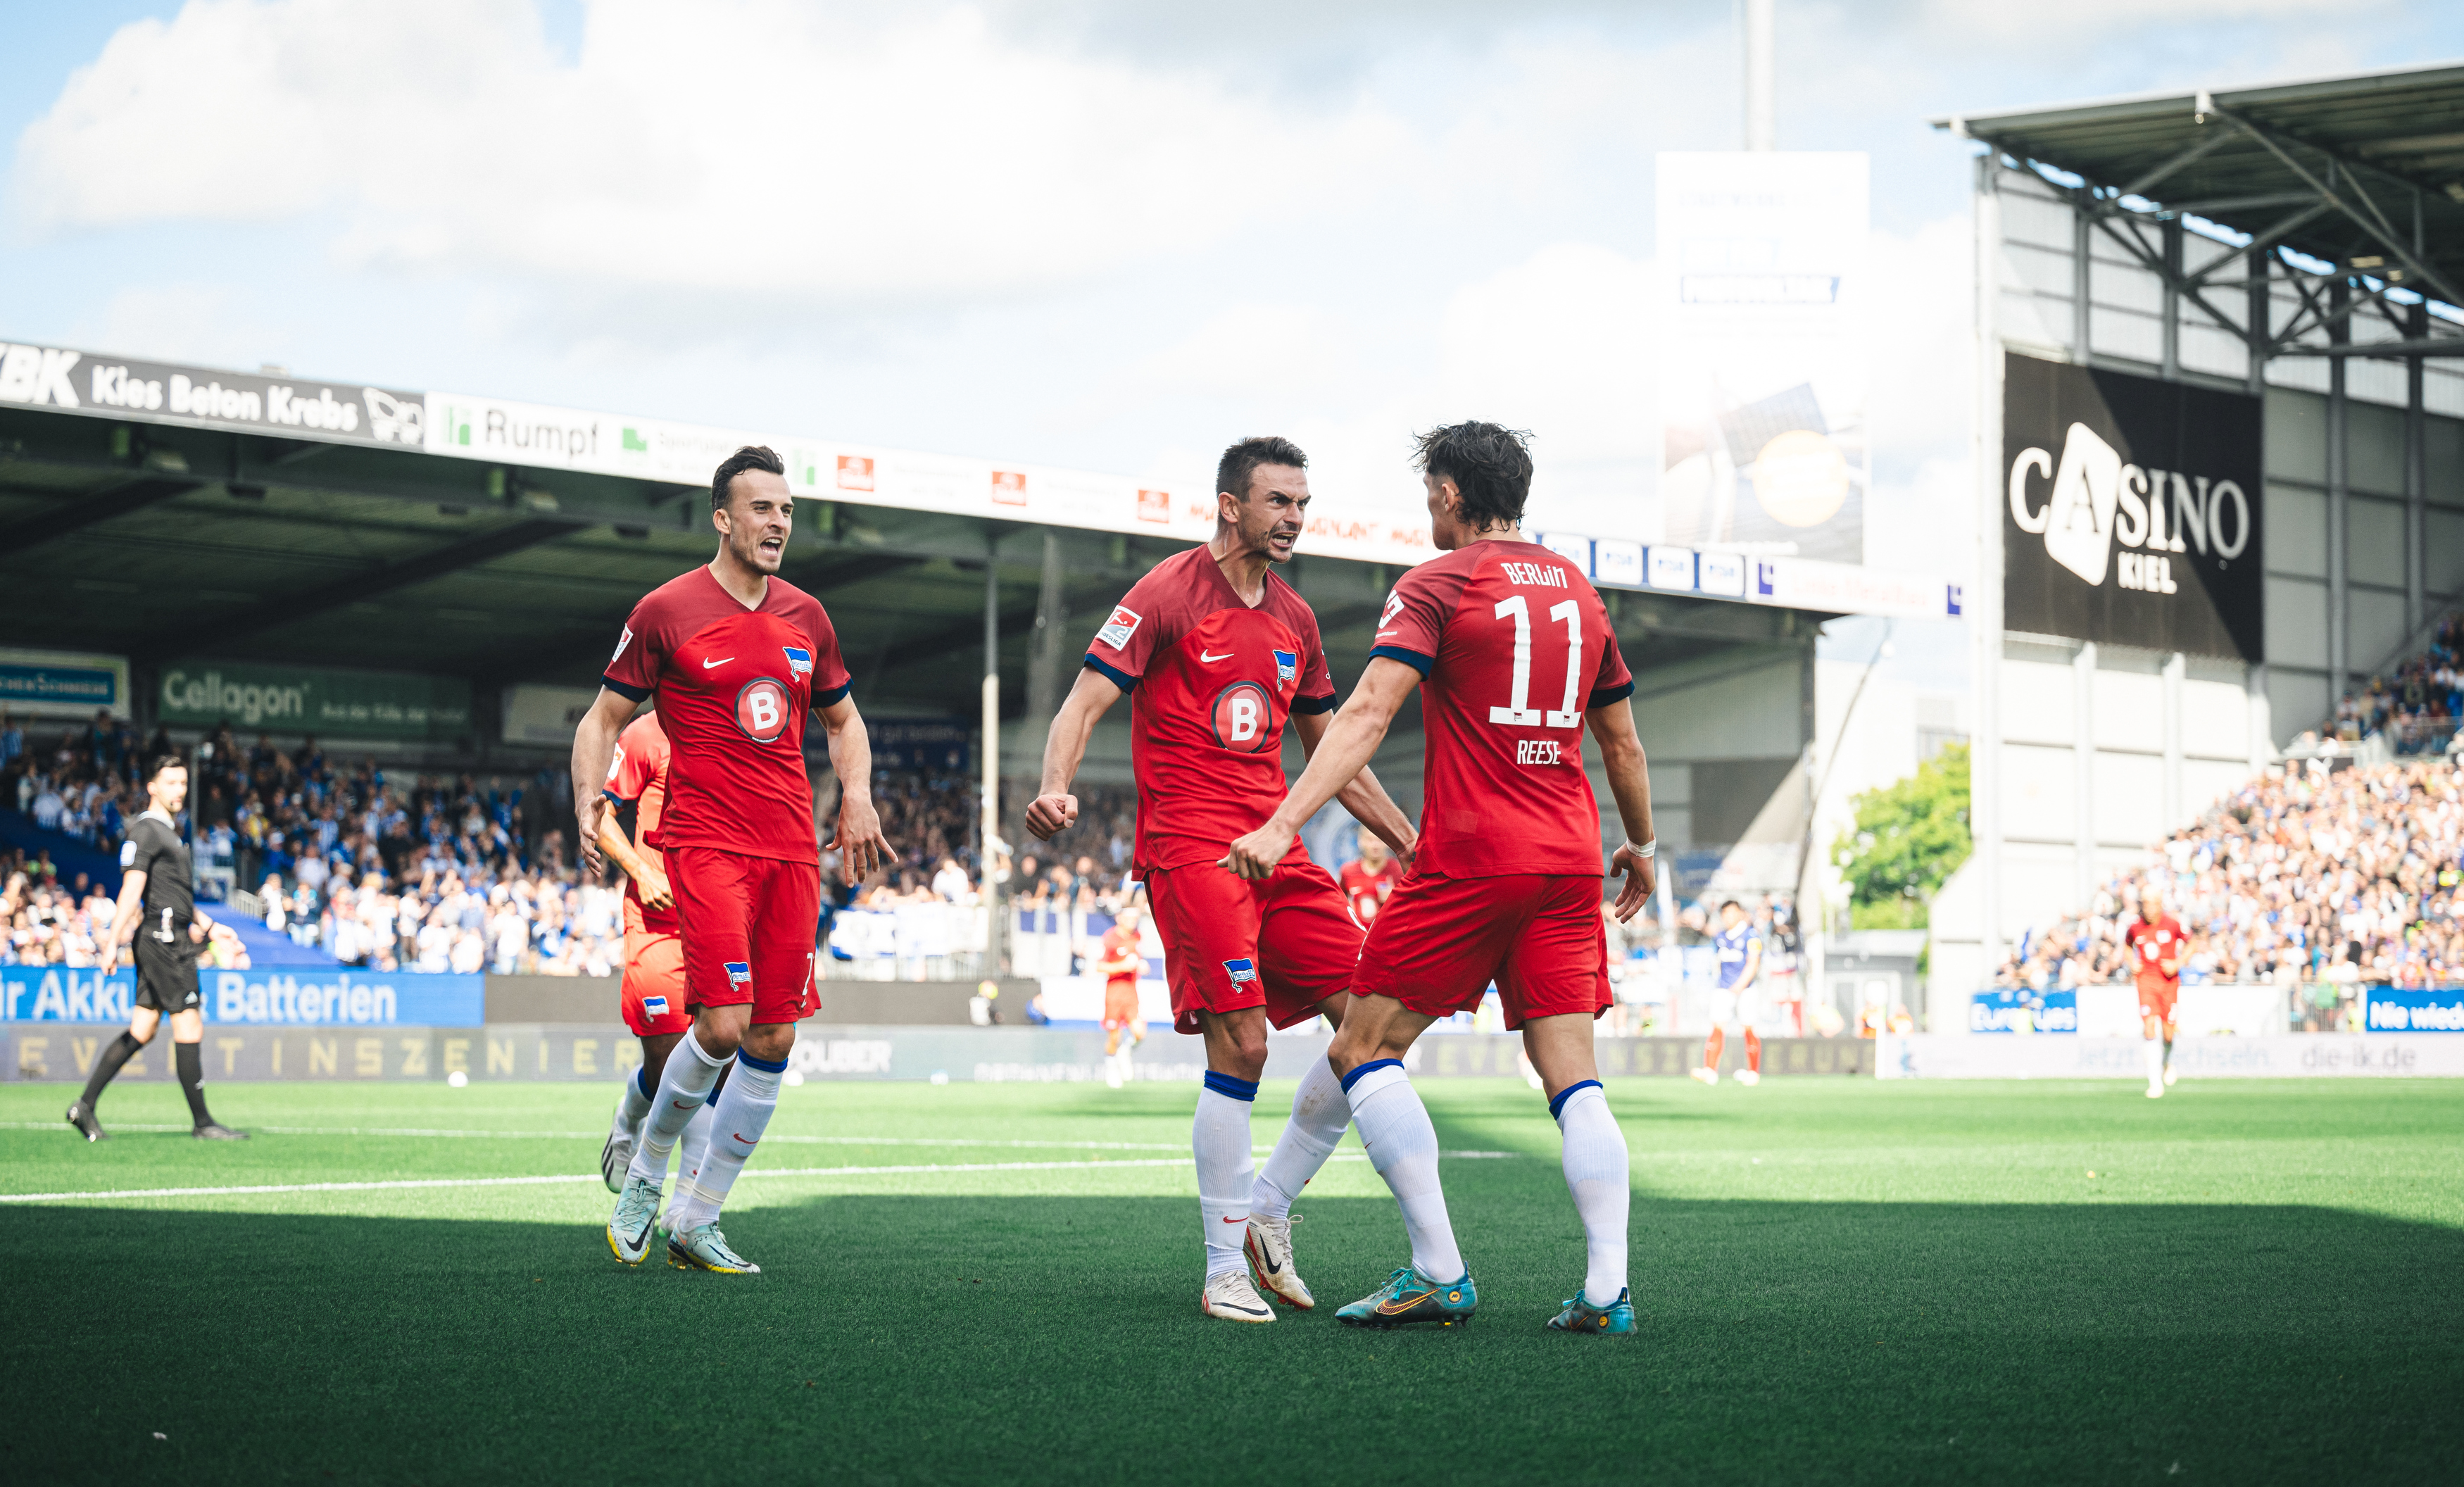 Haris Tabaković, Smail Prevljak and Fabian Reese celebrate a goal.